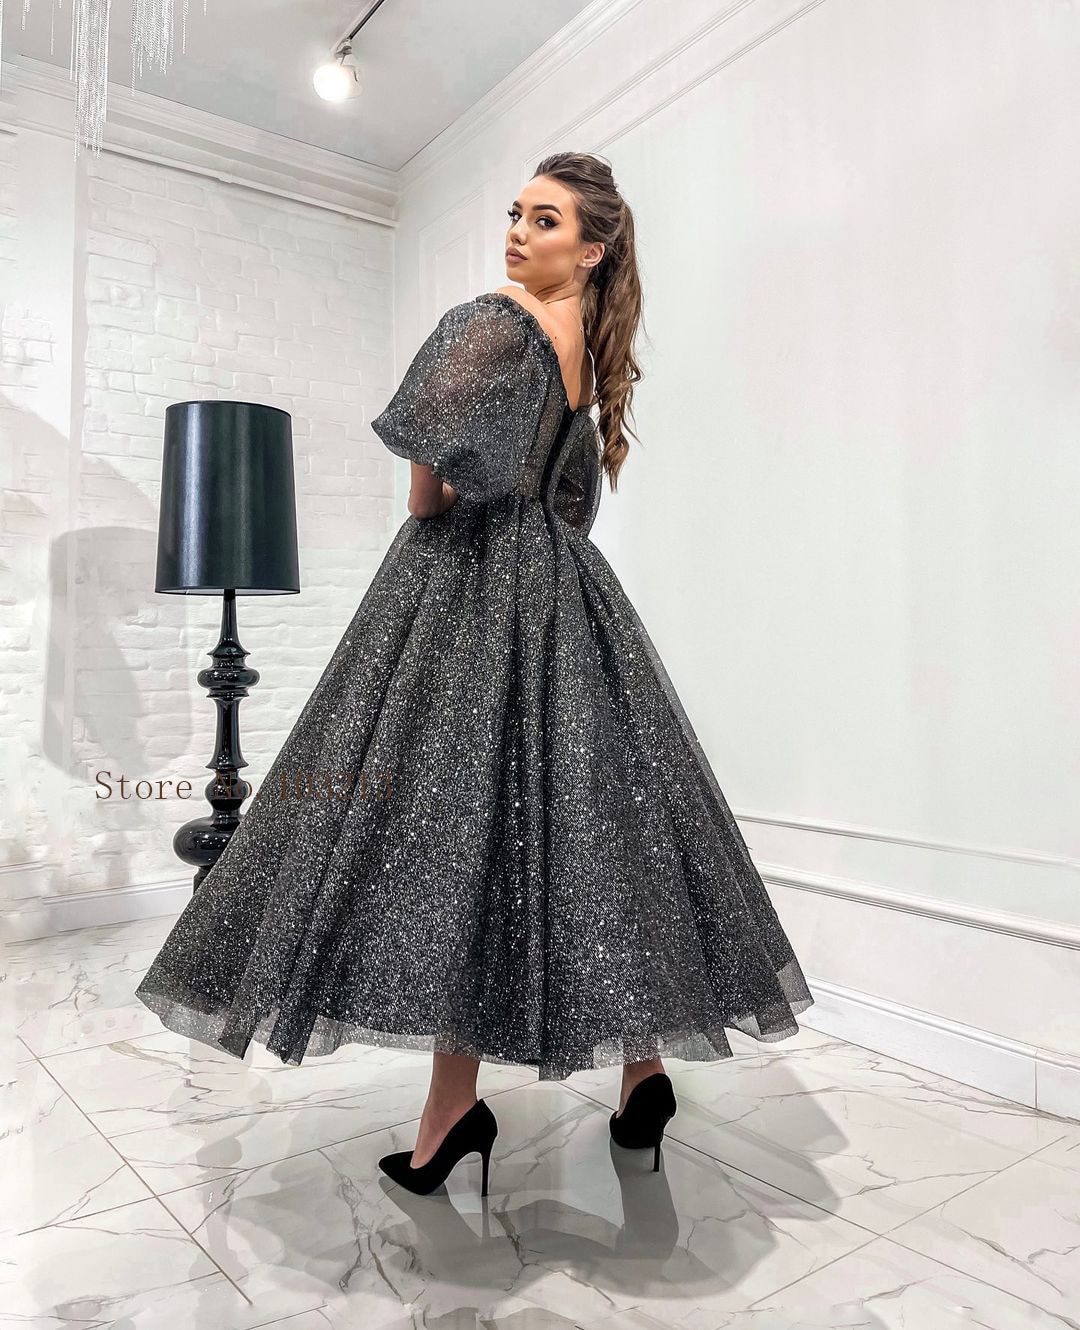 Black Gliter Tulle Off The Shoulder Tea Length Prom Dress in Homecoming Court Dresses